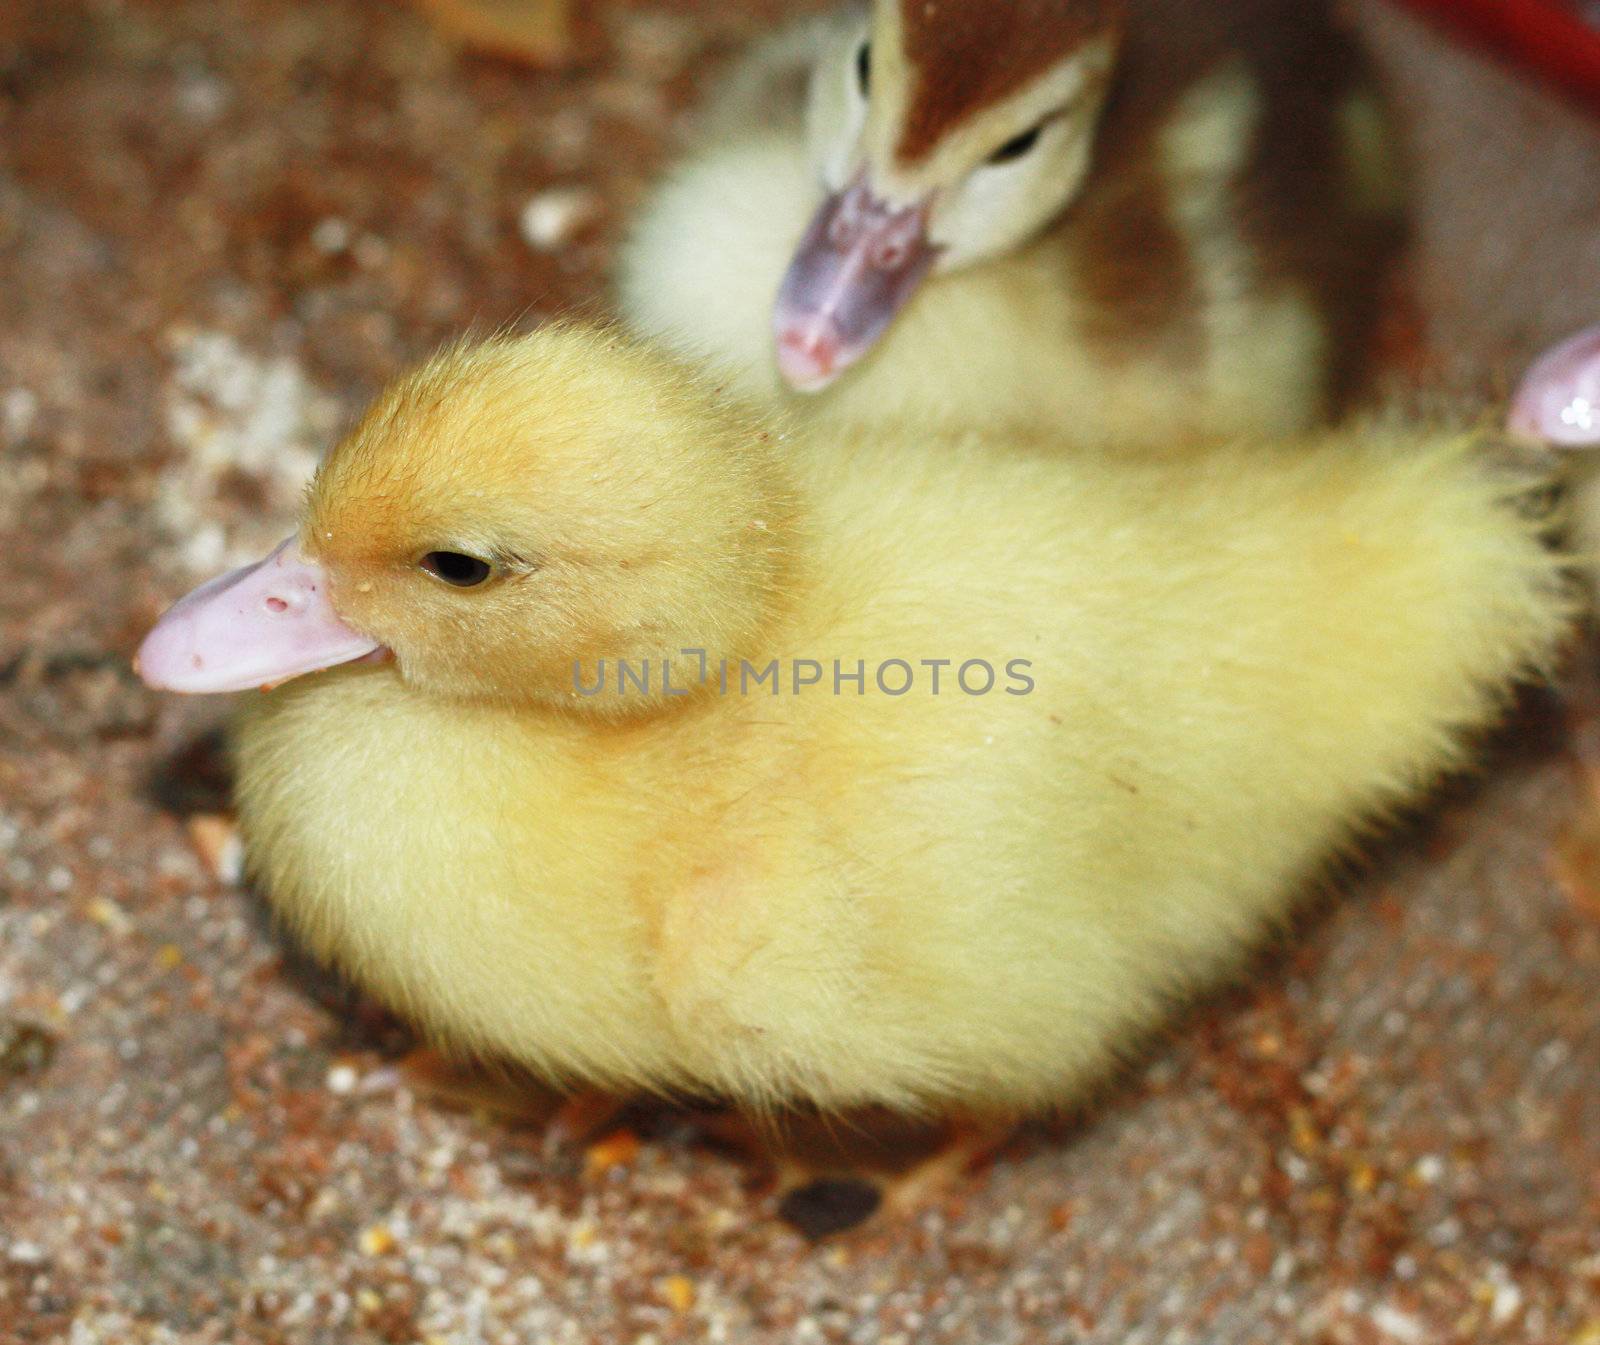 yellow feathery duckling by schankz